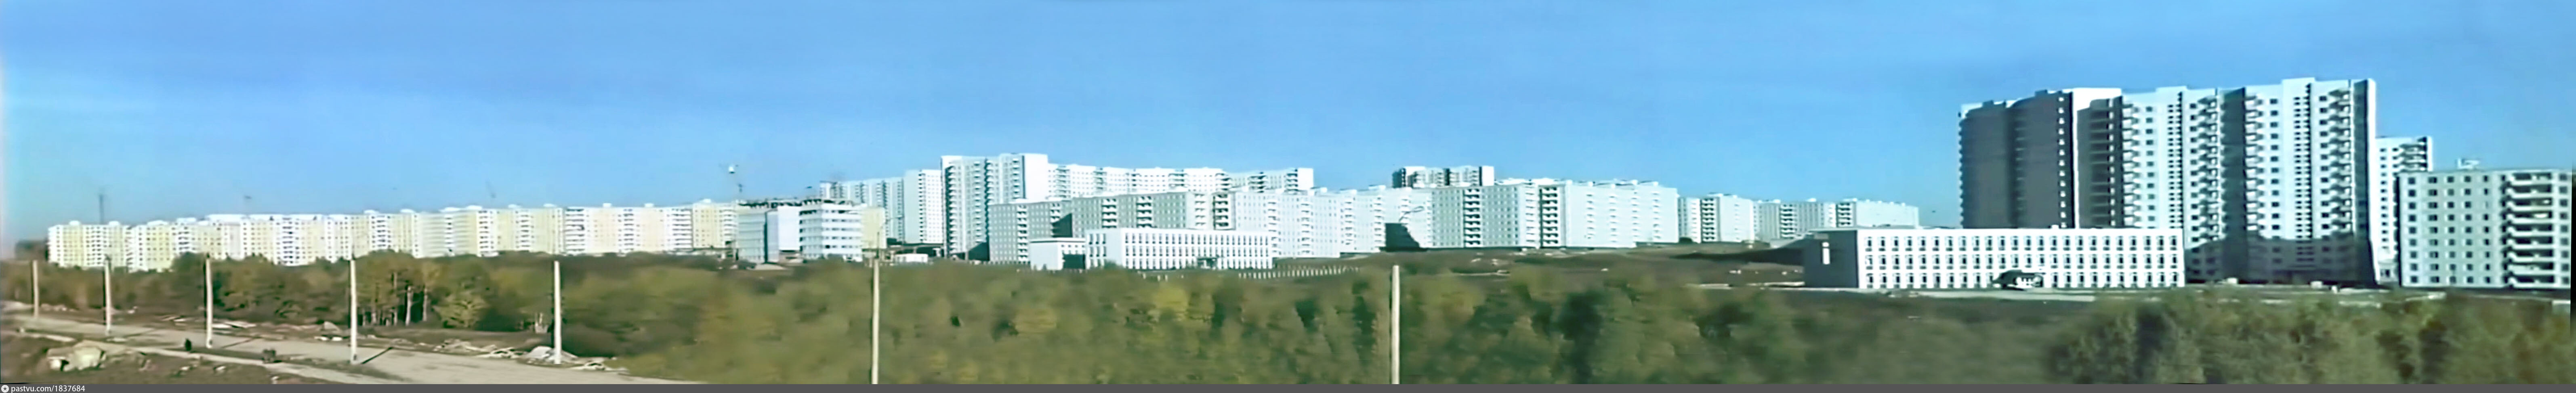 Ясенево круглосуточно. Ясенево 2020. Завод в Ясенево. Ясенево панорама. Ясенево 1990.